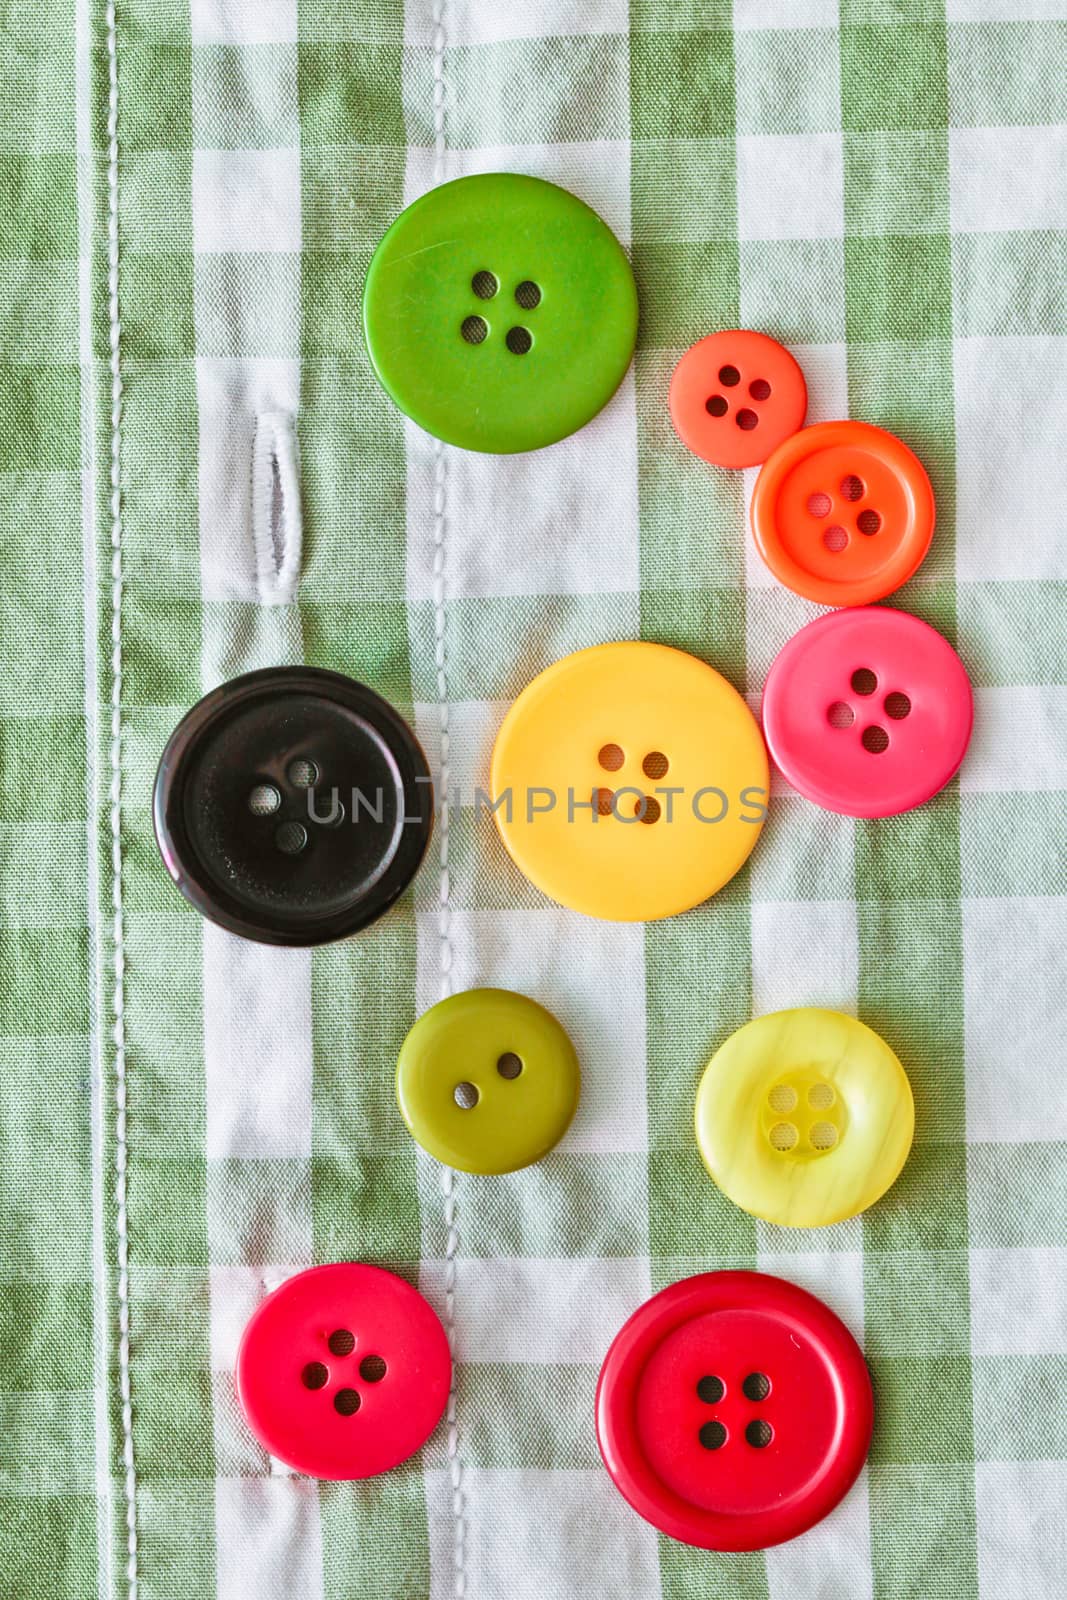 Buttons by trgowanlock